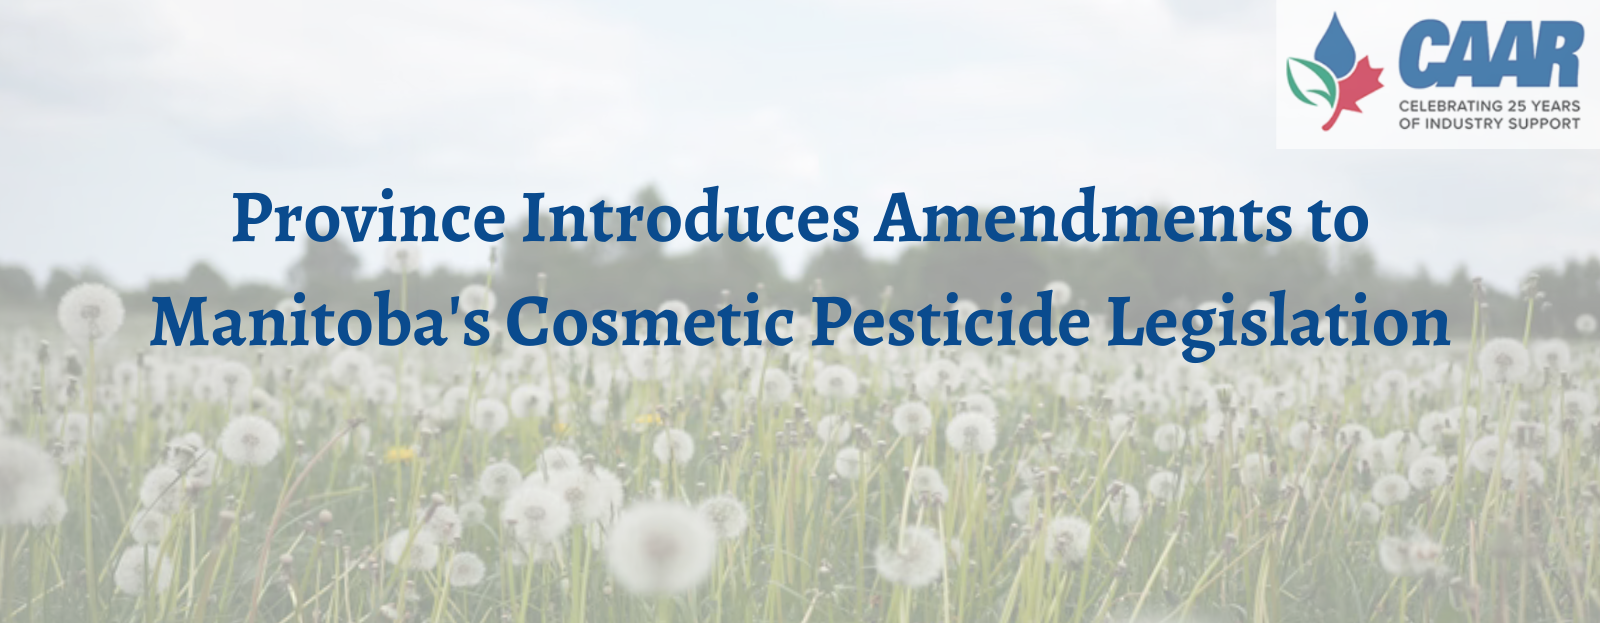 Manitoba Introduces Amendments to Cosmetic Pesticide Legislation